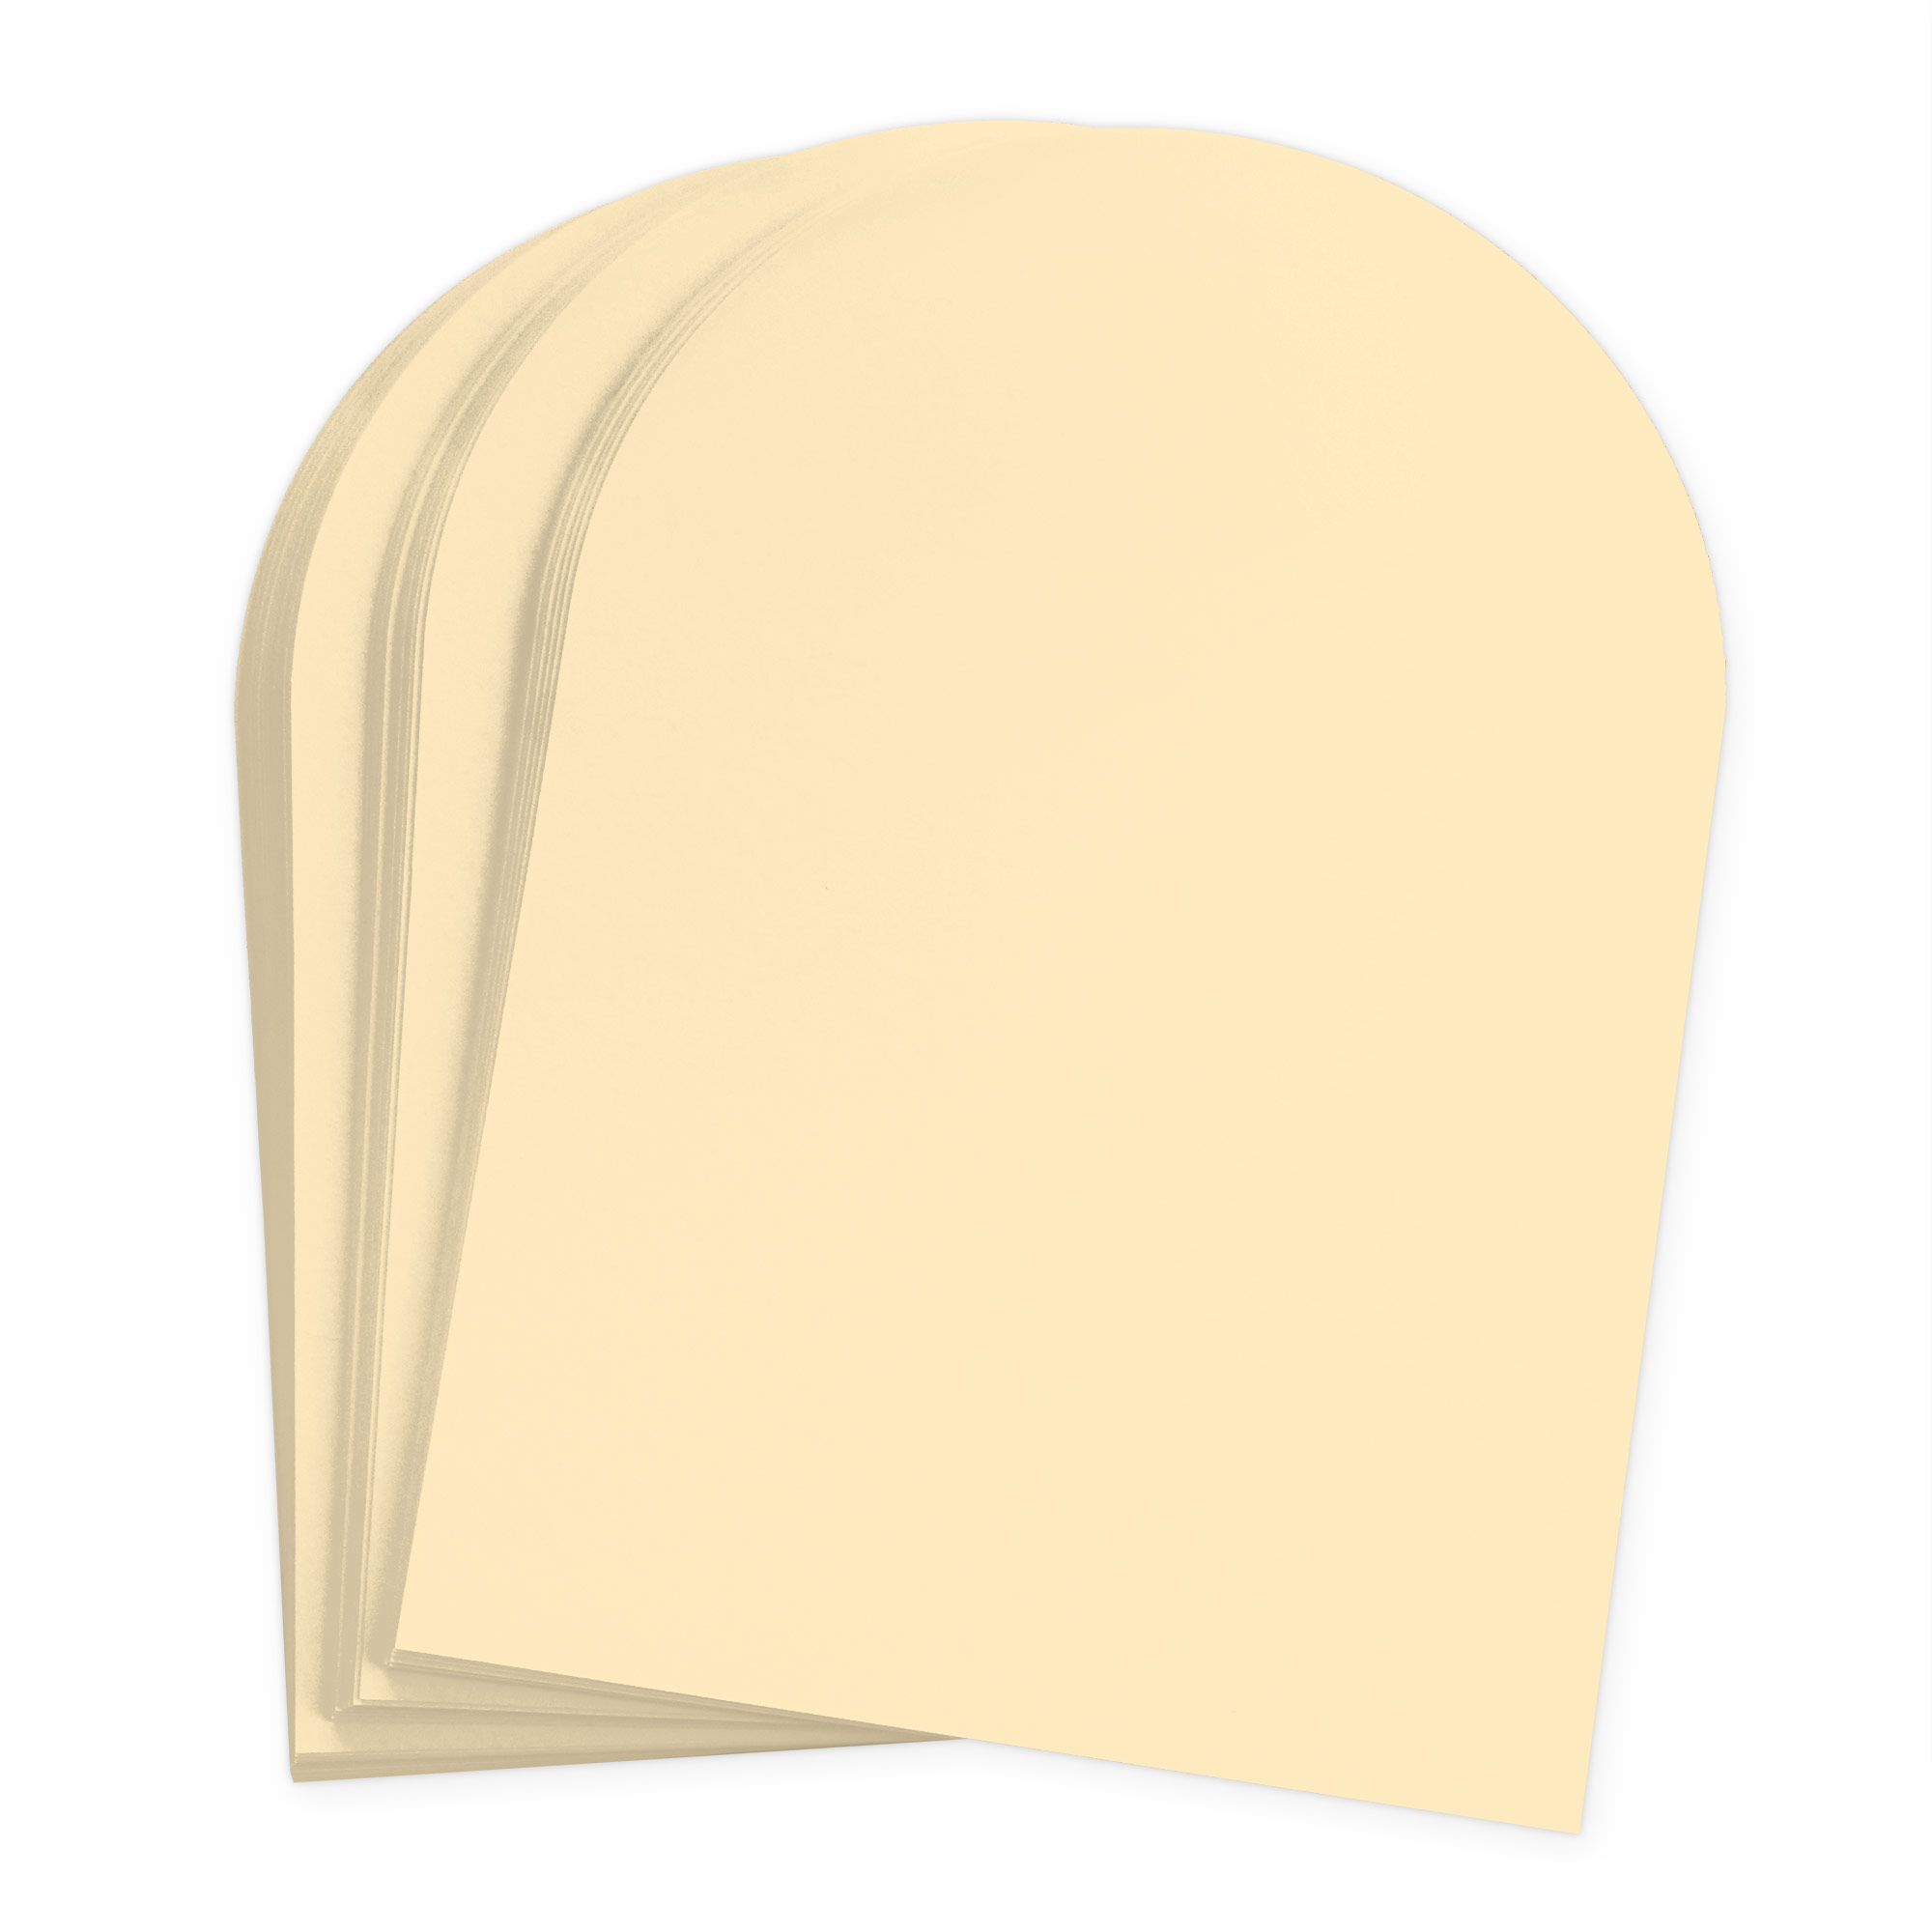 Antique Ivory Arch Shaped Card - A2 Gmund Colors Matt 4 1/4 x 5 1/2 111C